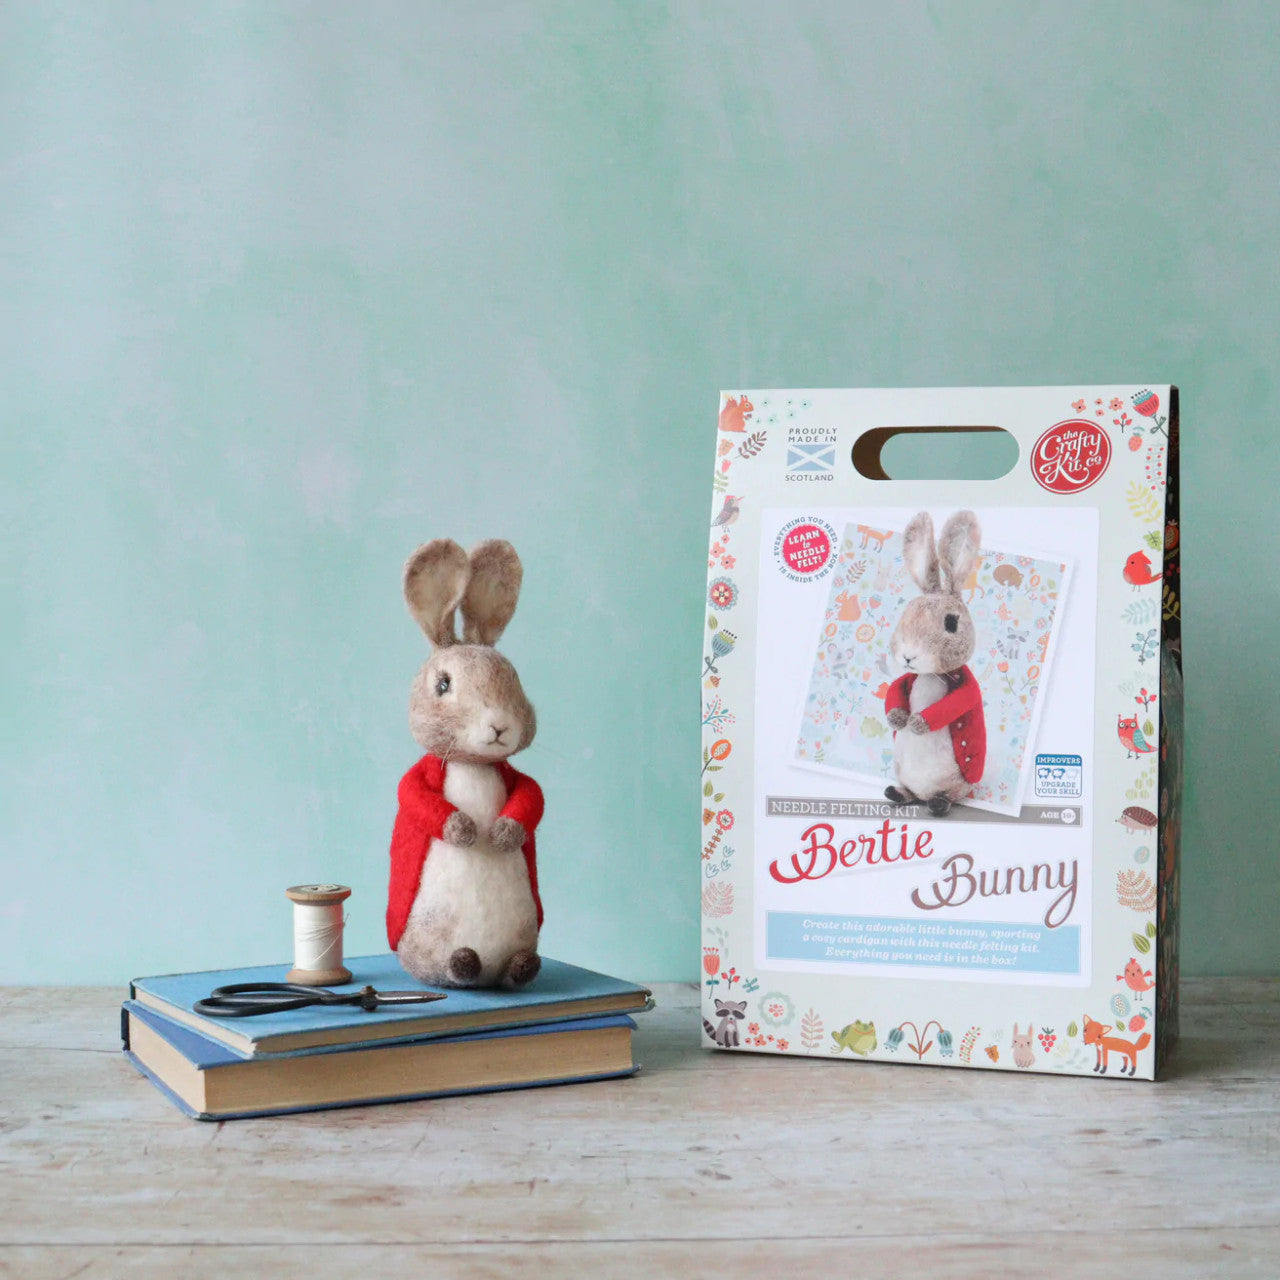 Bertie Bunny Needle Feltin Kit from The Crafty Kit Co. Made in Scotland.